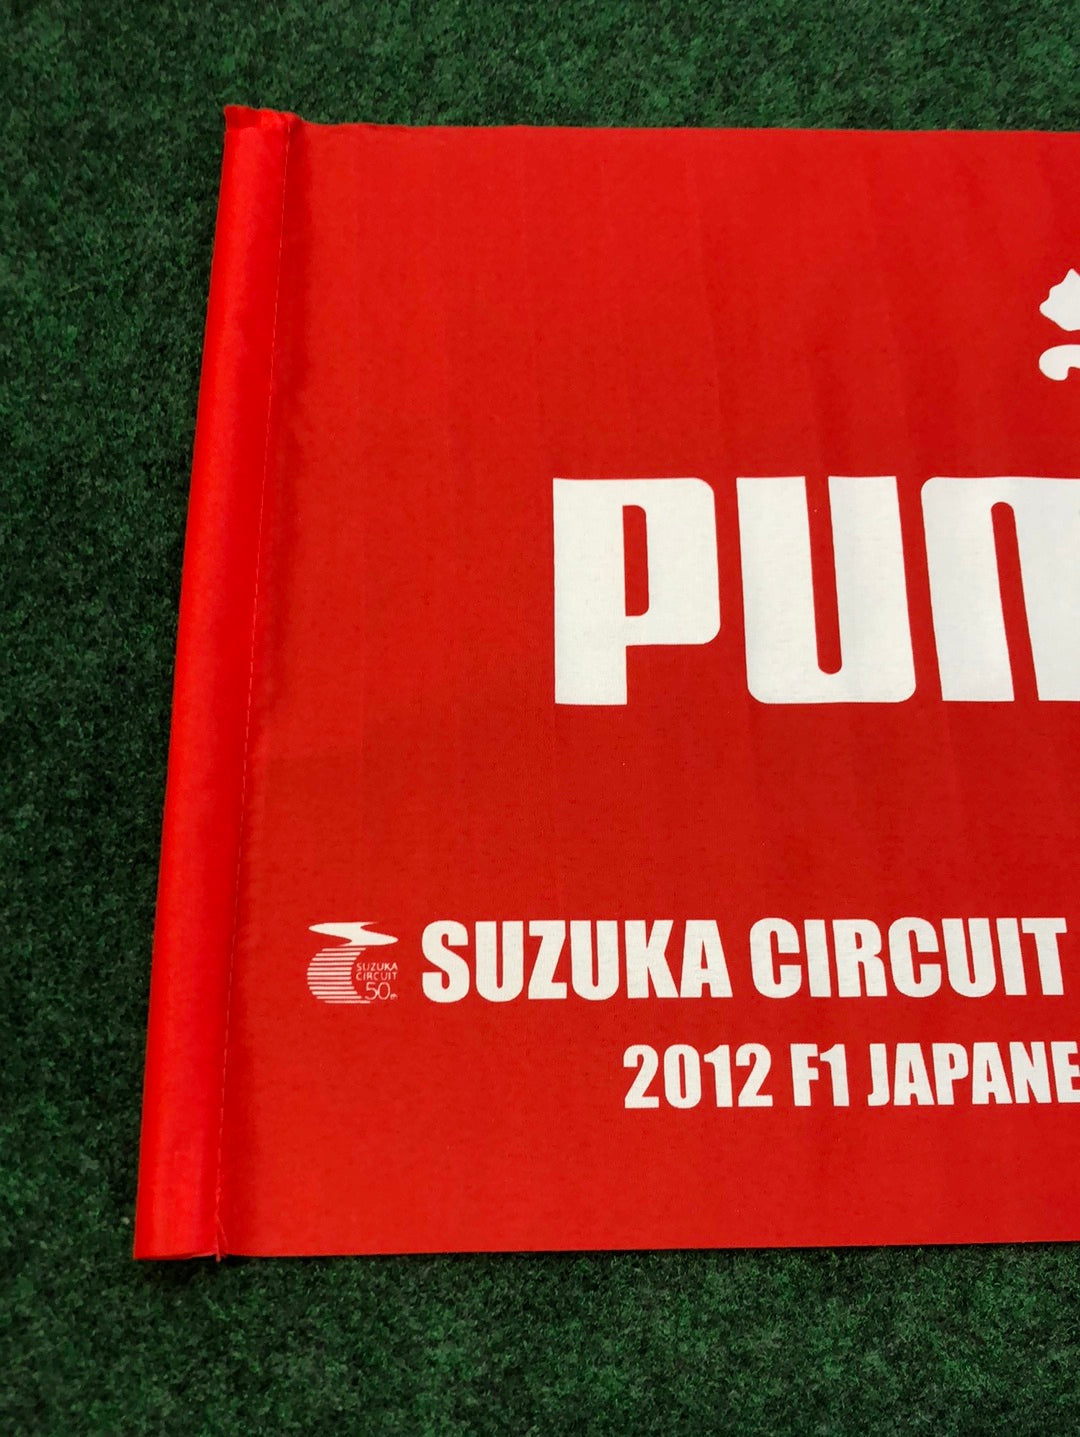 PUMA x Suzuka Circuit 50th Anniversary - 2012 Formula 1 Grand Prix Race Day Flag